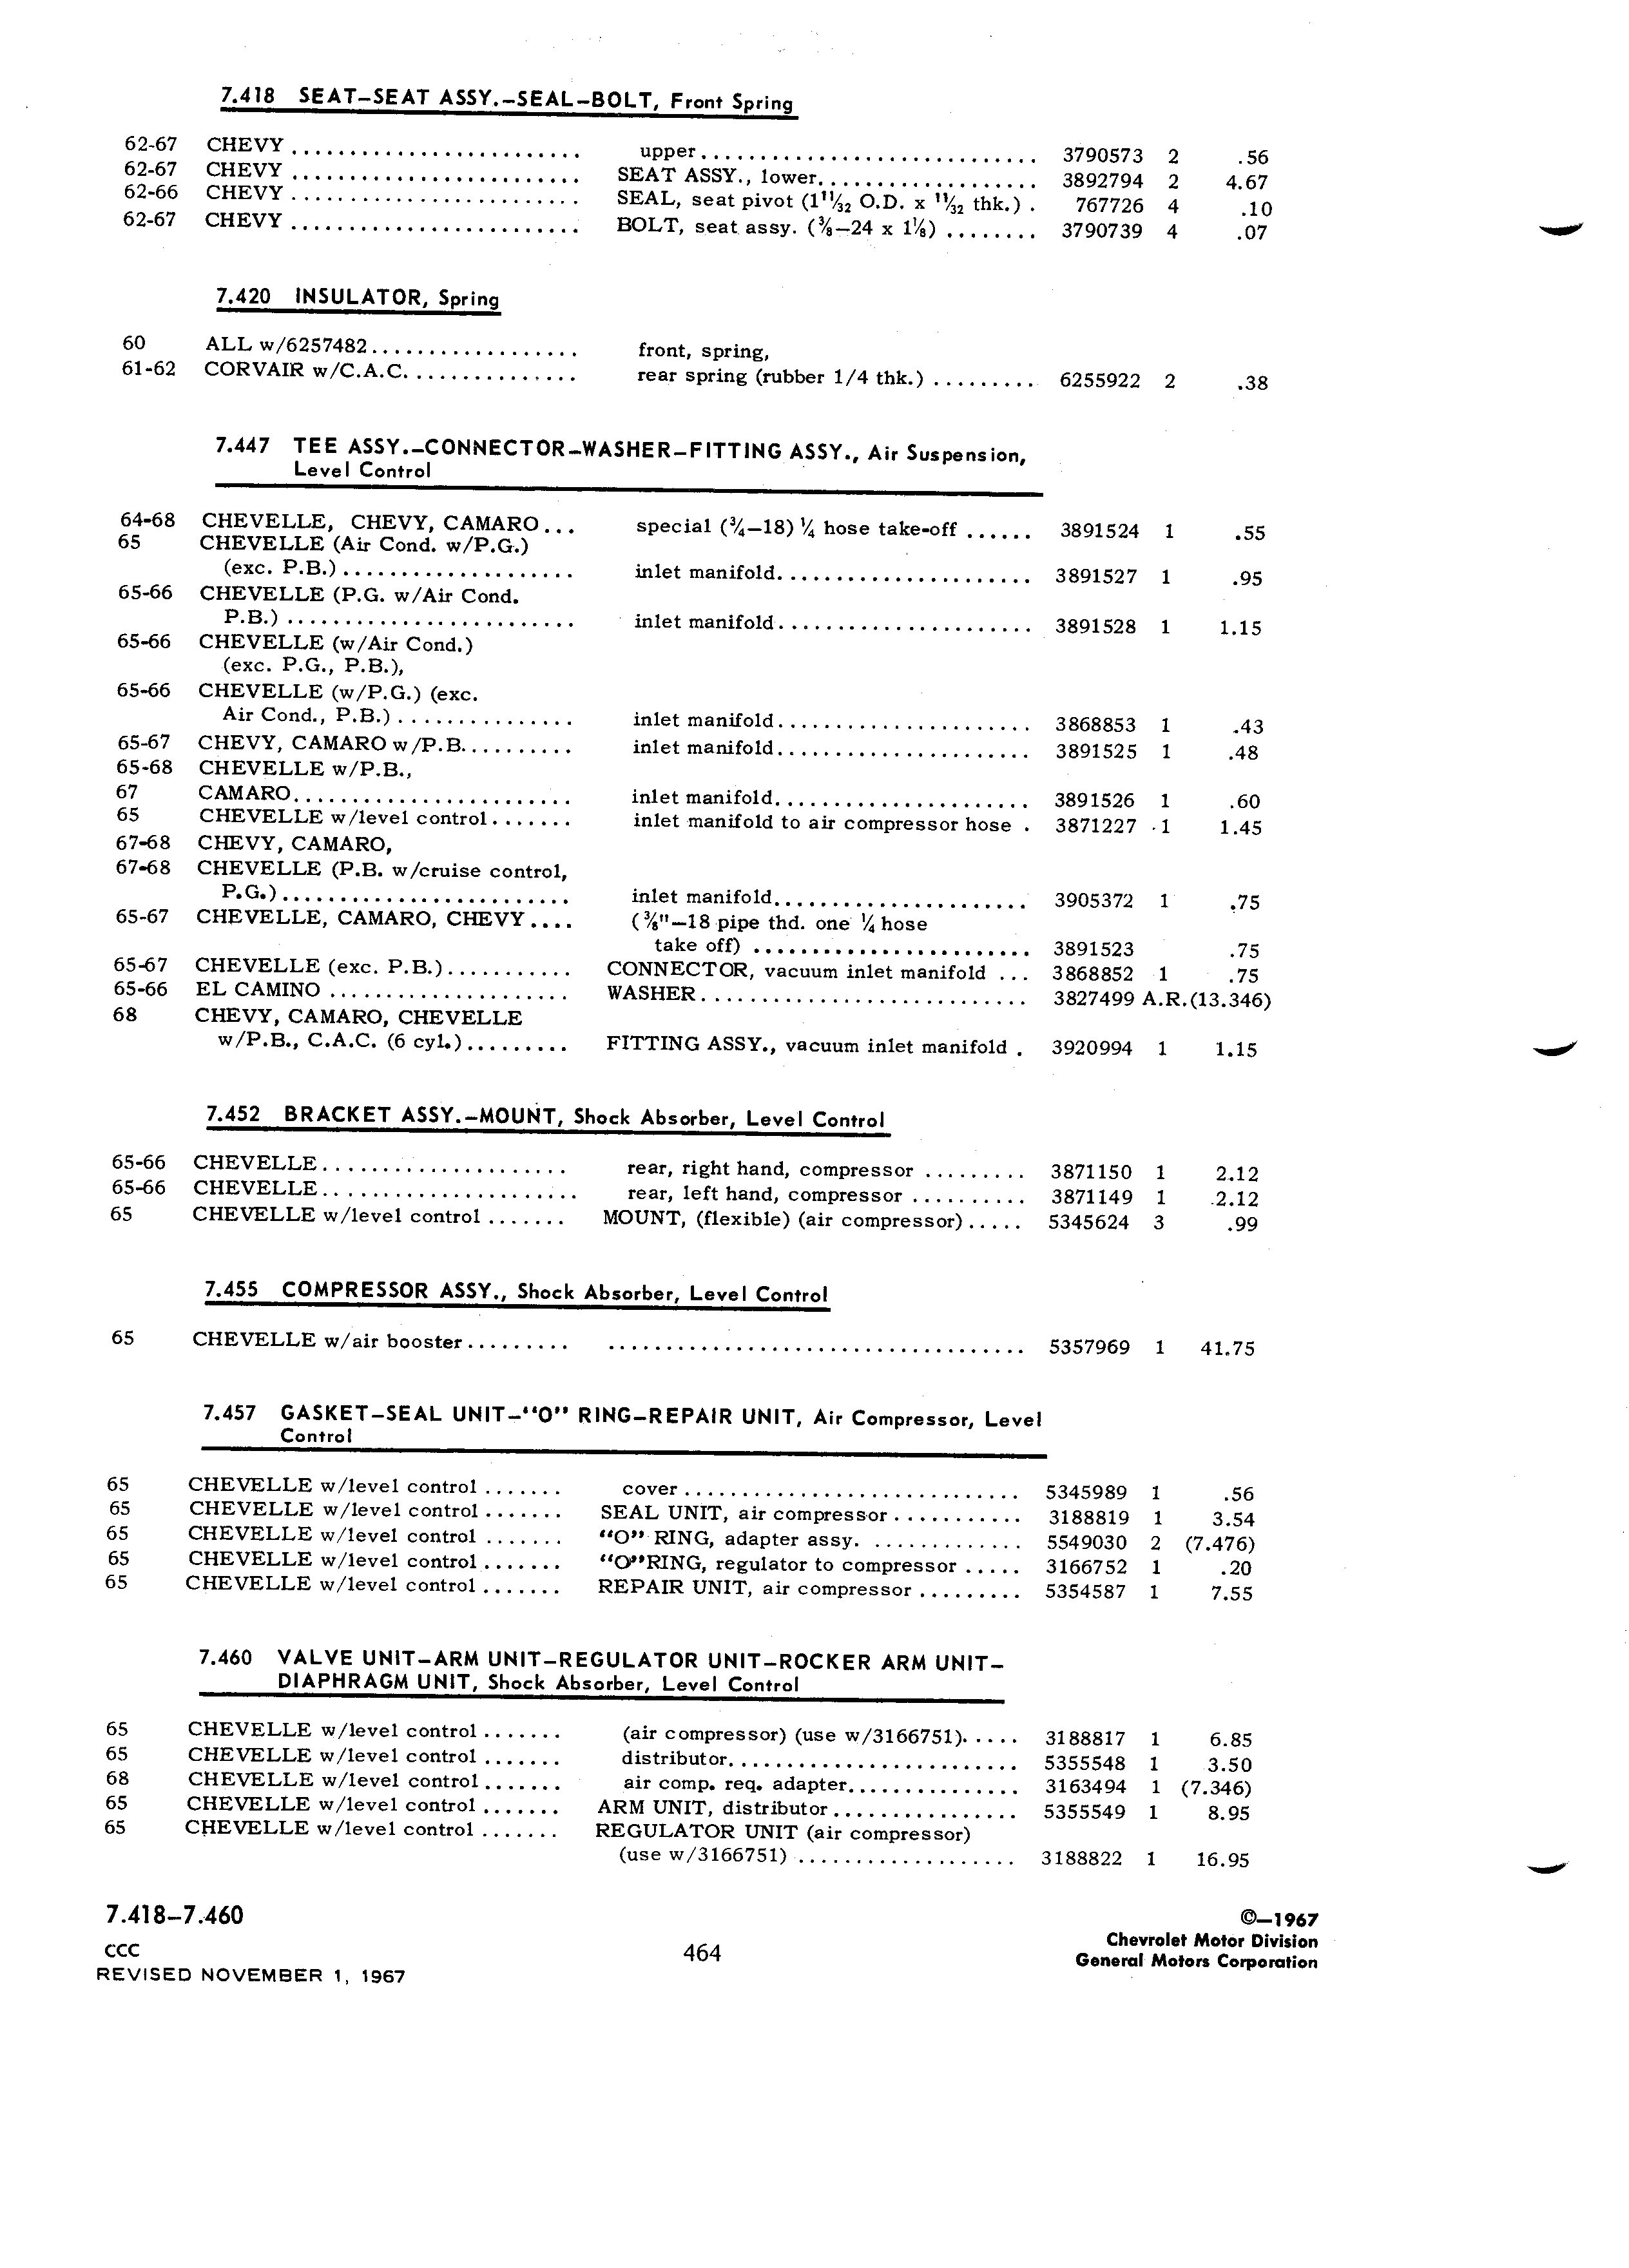 Parts and Accessories Catalog P&A 34 November 1967